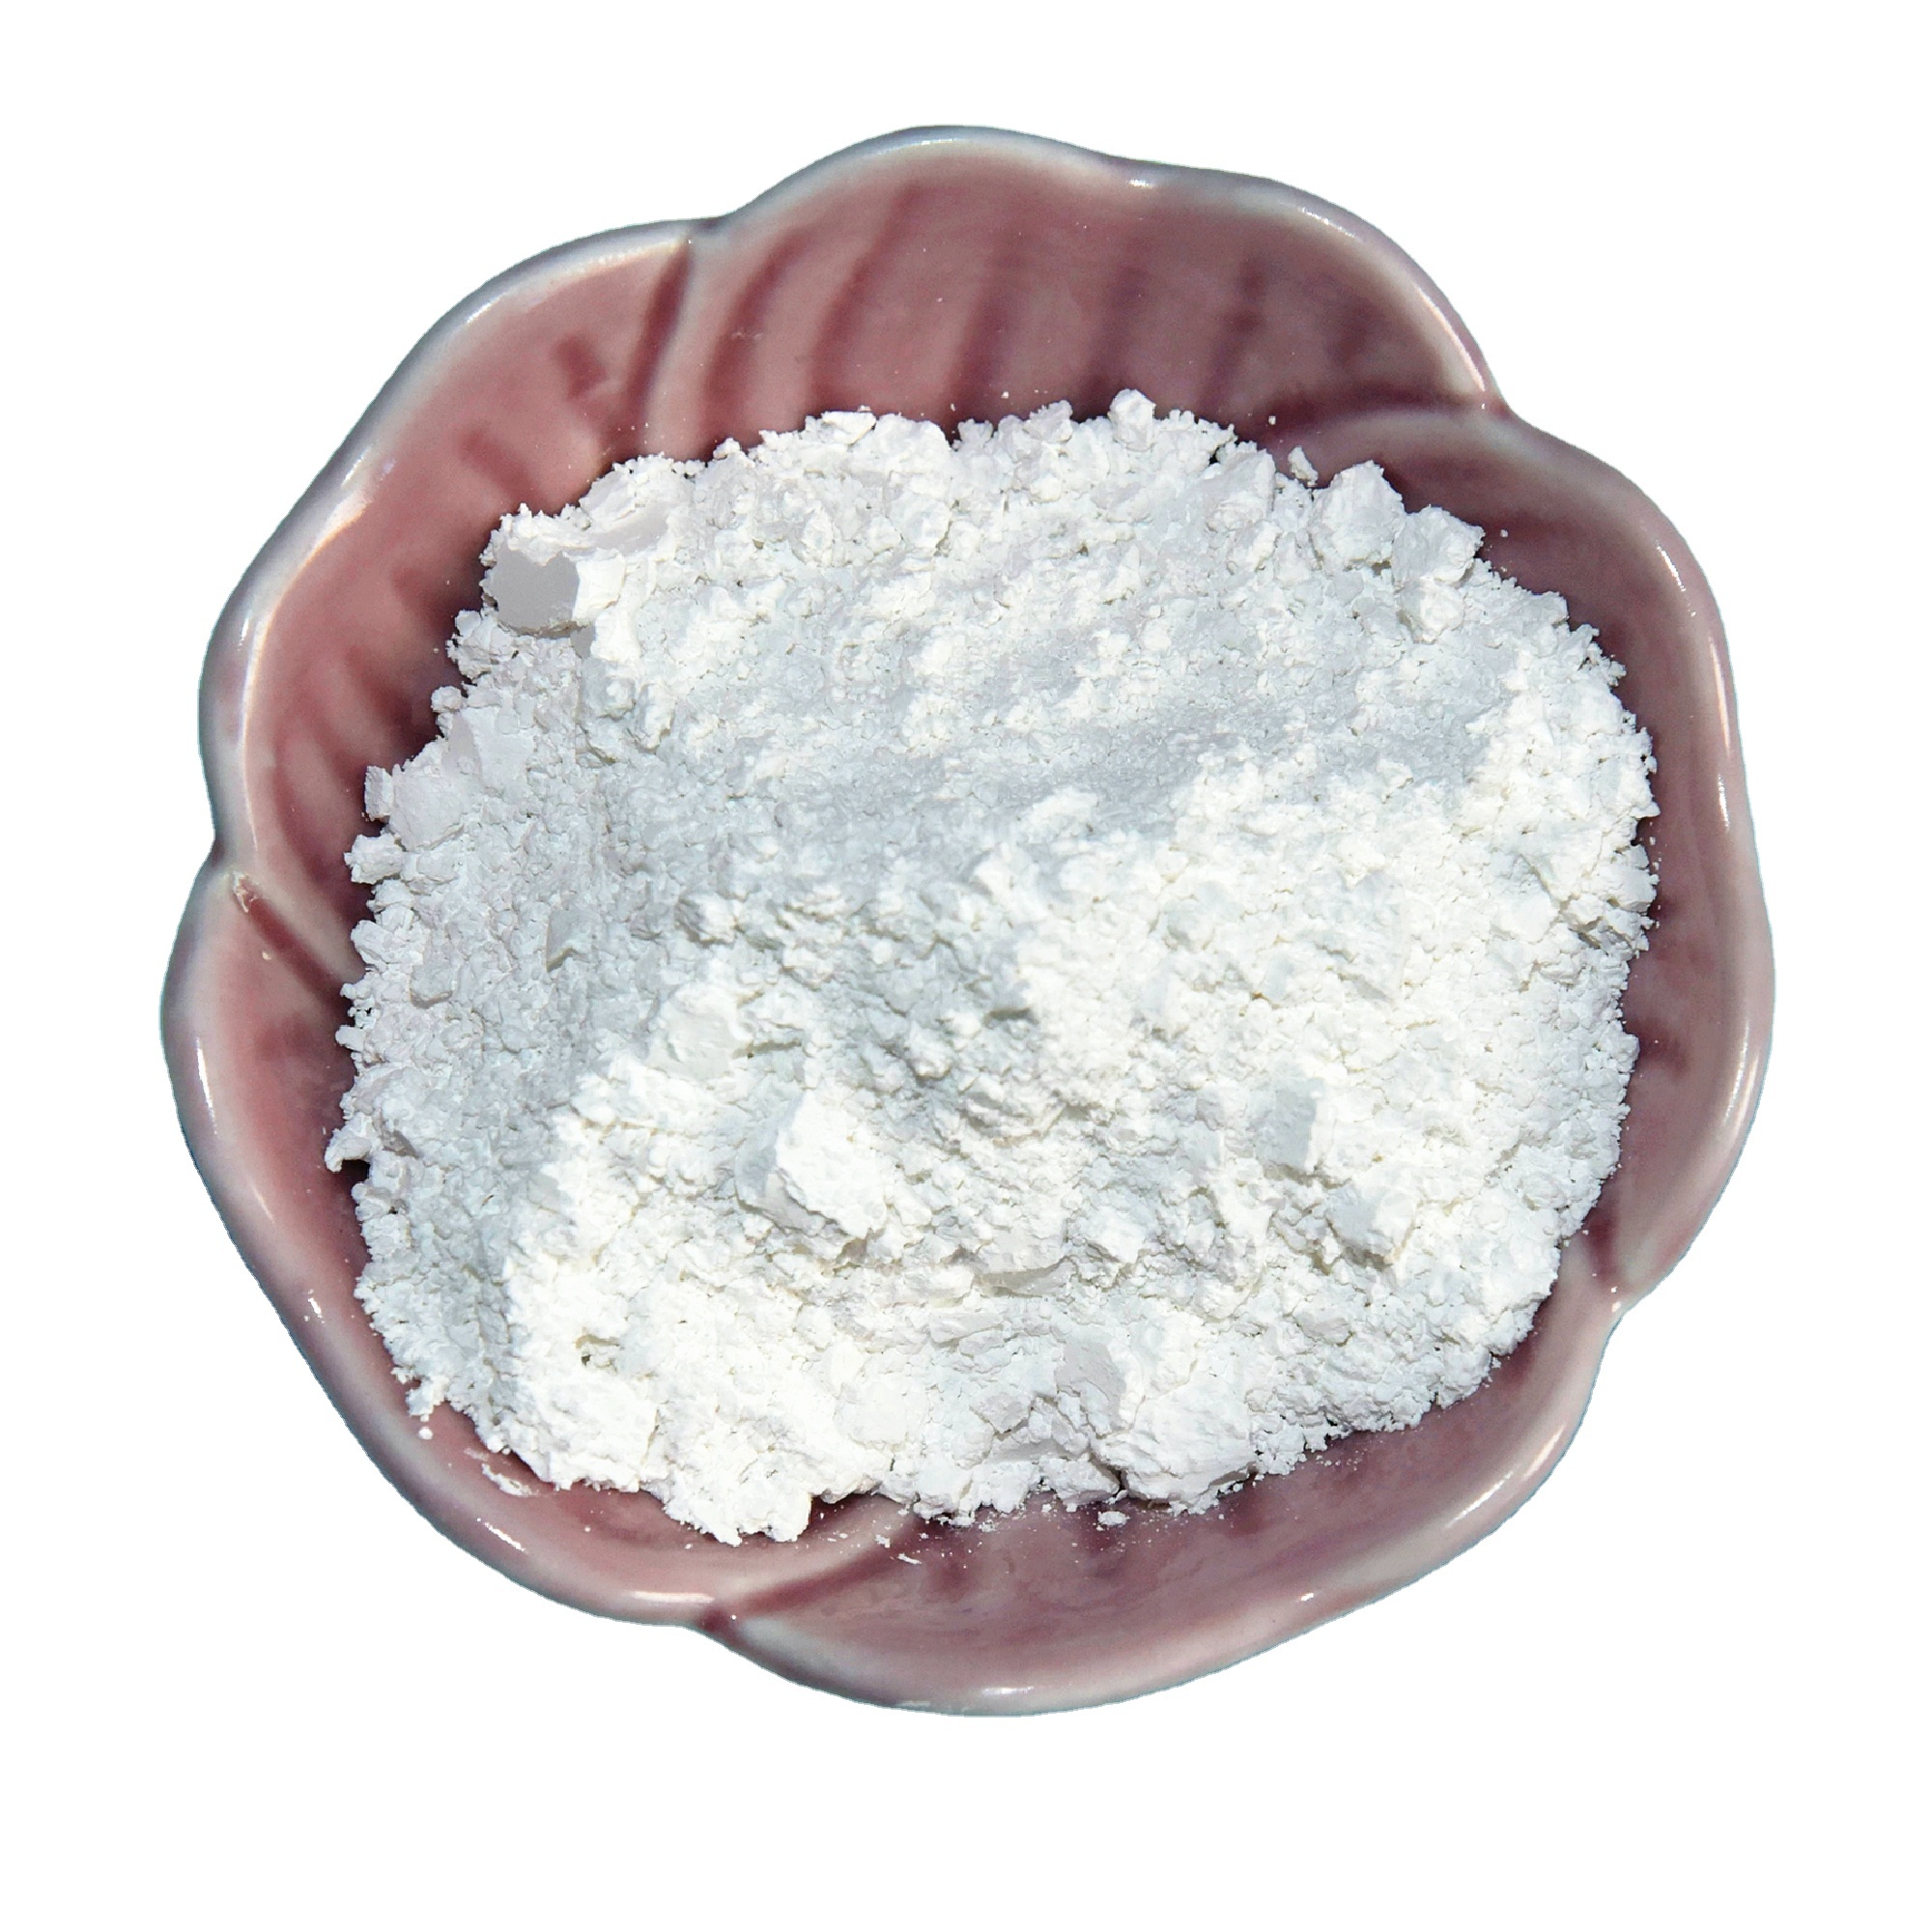 Hot sale of Superfine super white Tourmaline powder, White tourmaline powder for Meltblown cloth